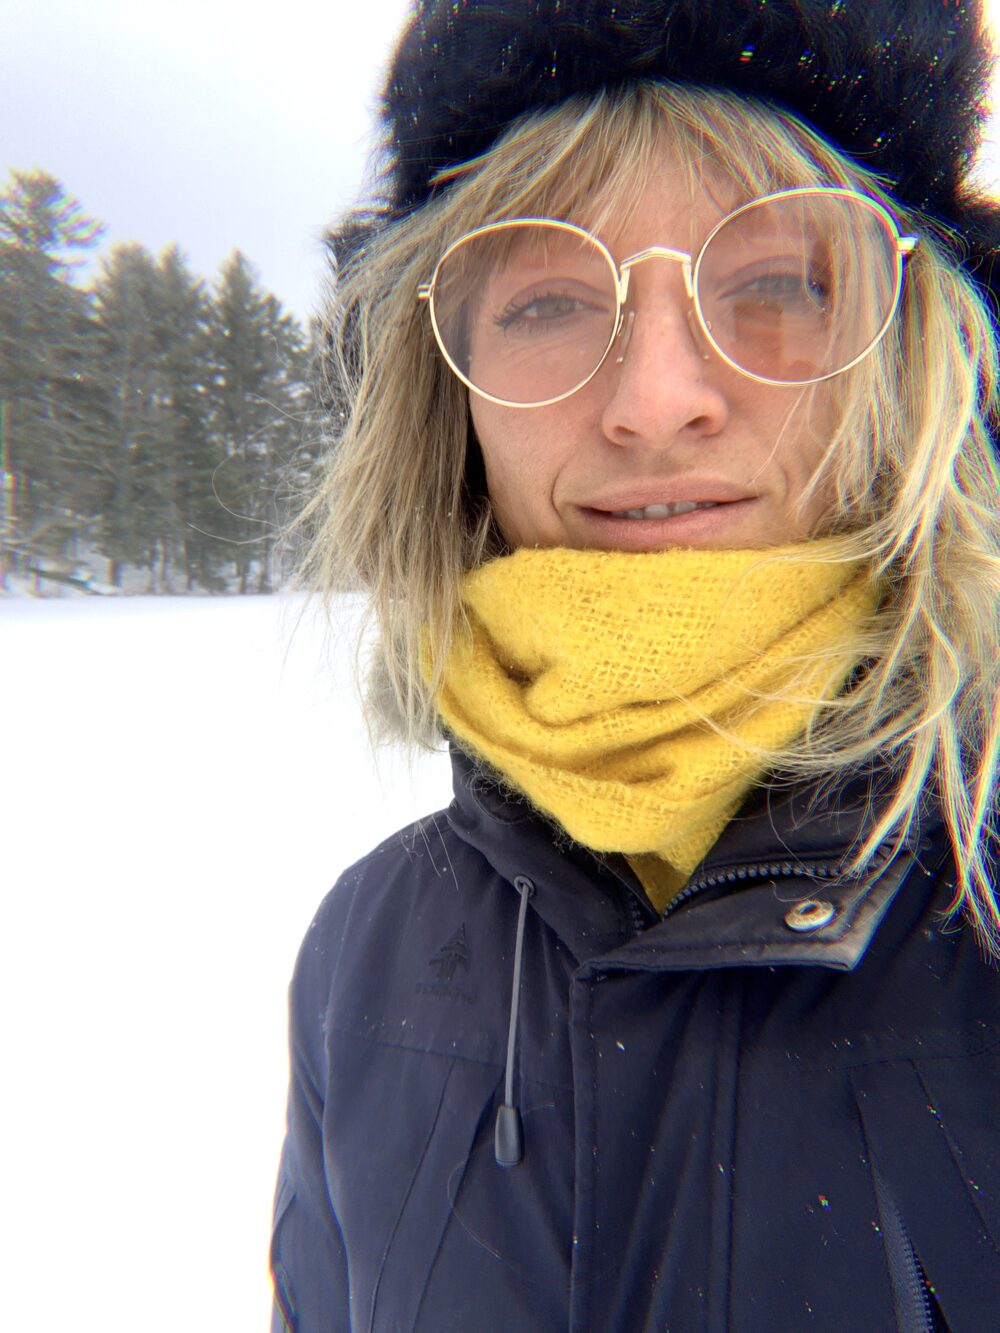 Day 329: Winter Wonderland of Snow